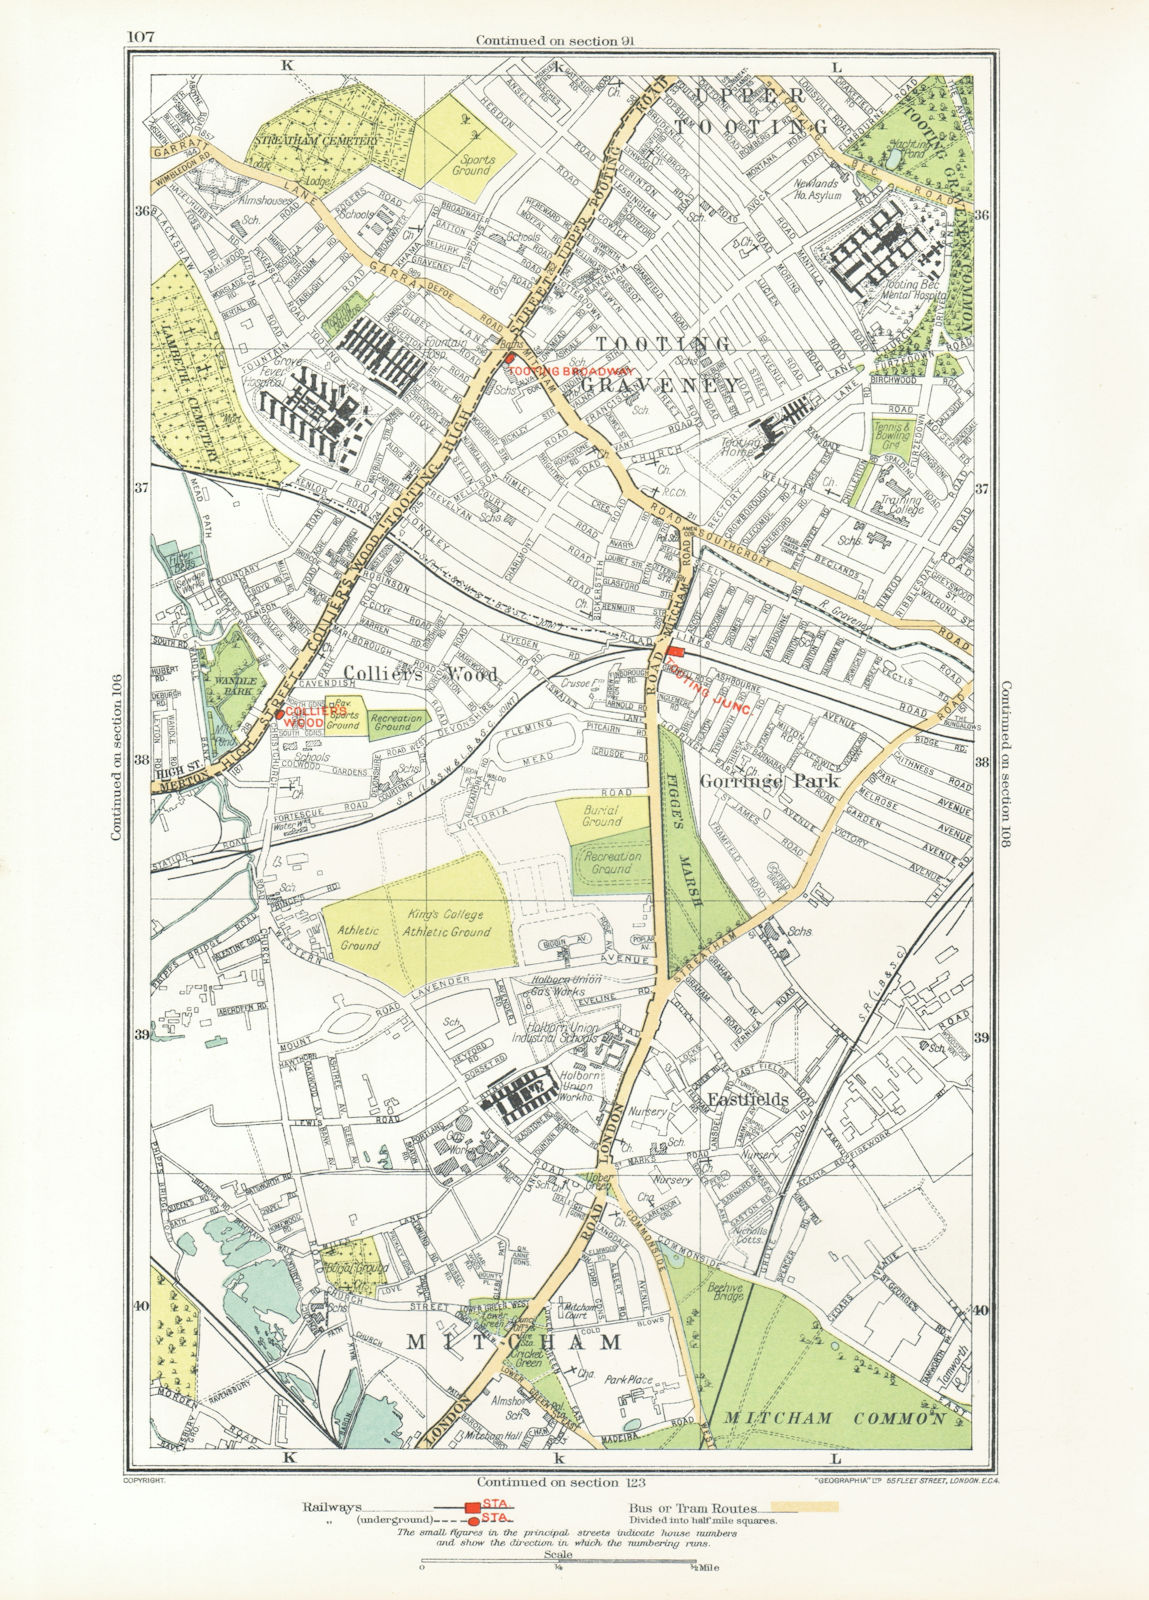 MITCHAM. Collier's Wood Tooting Graveney Furzedown Eastfields 1933 old map